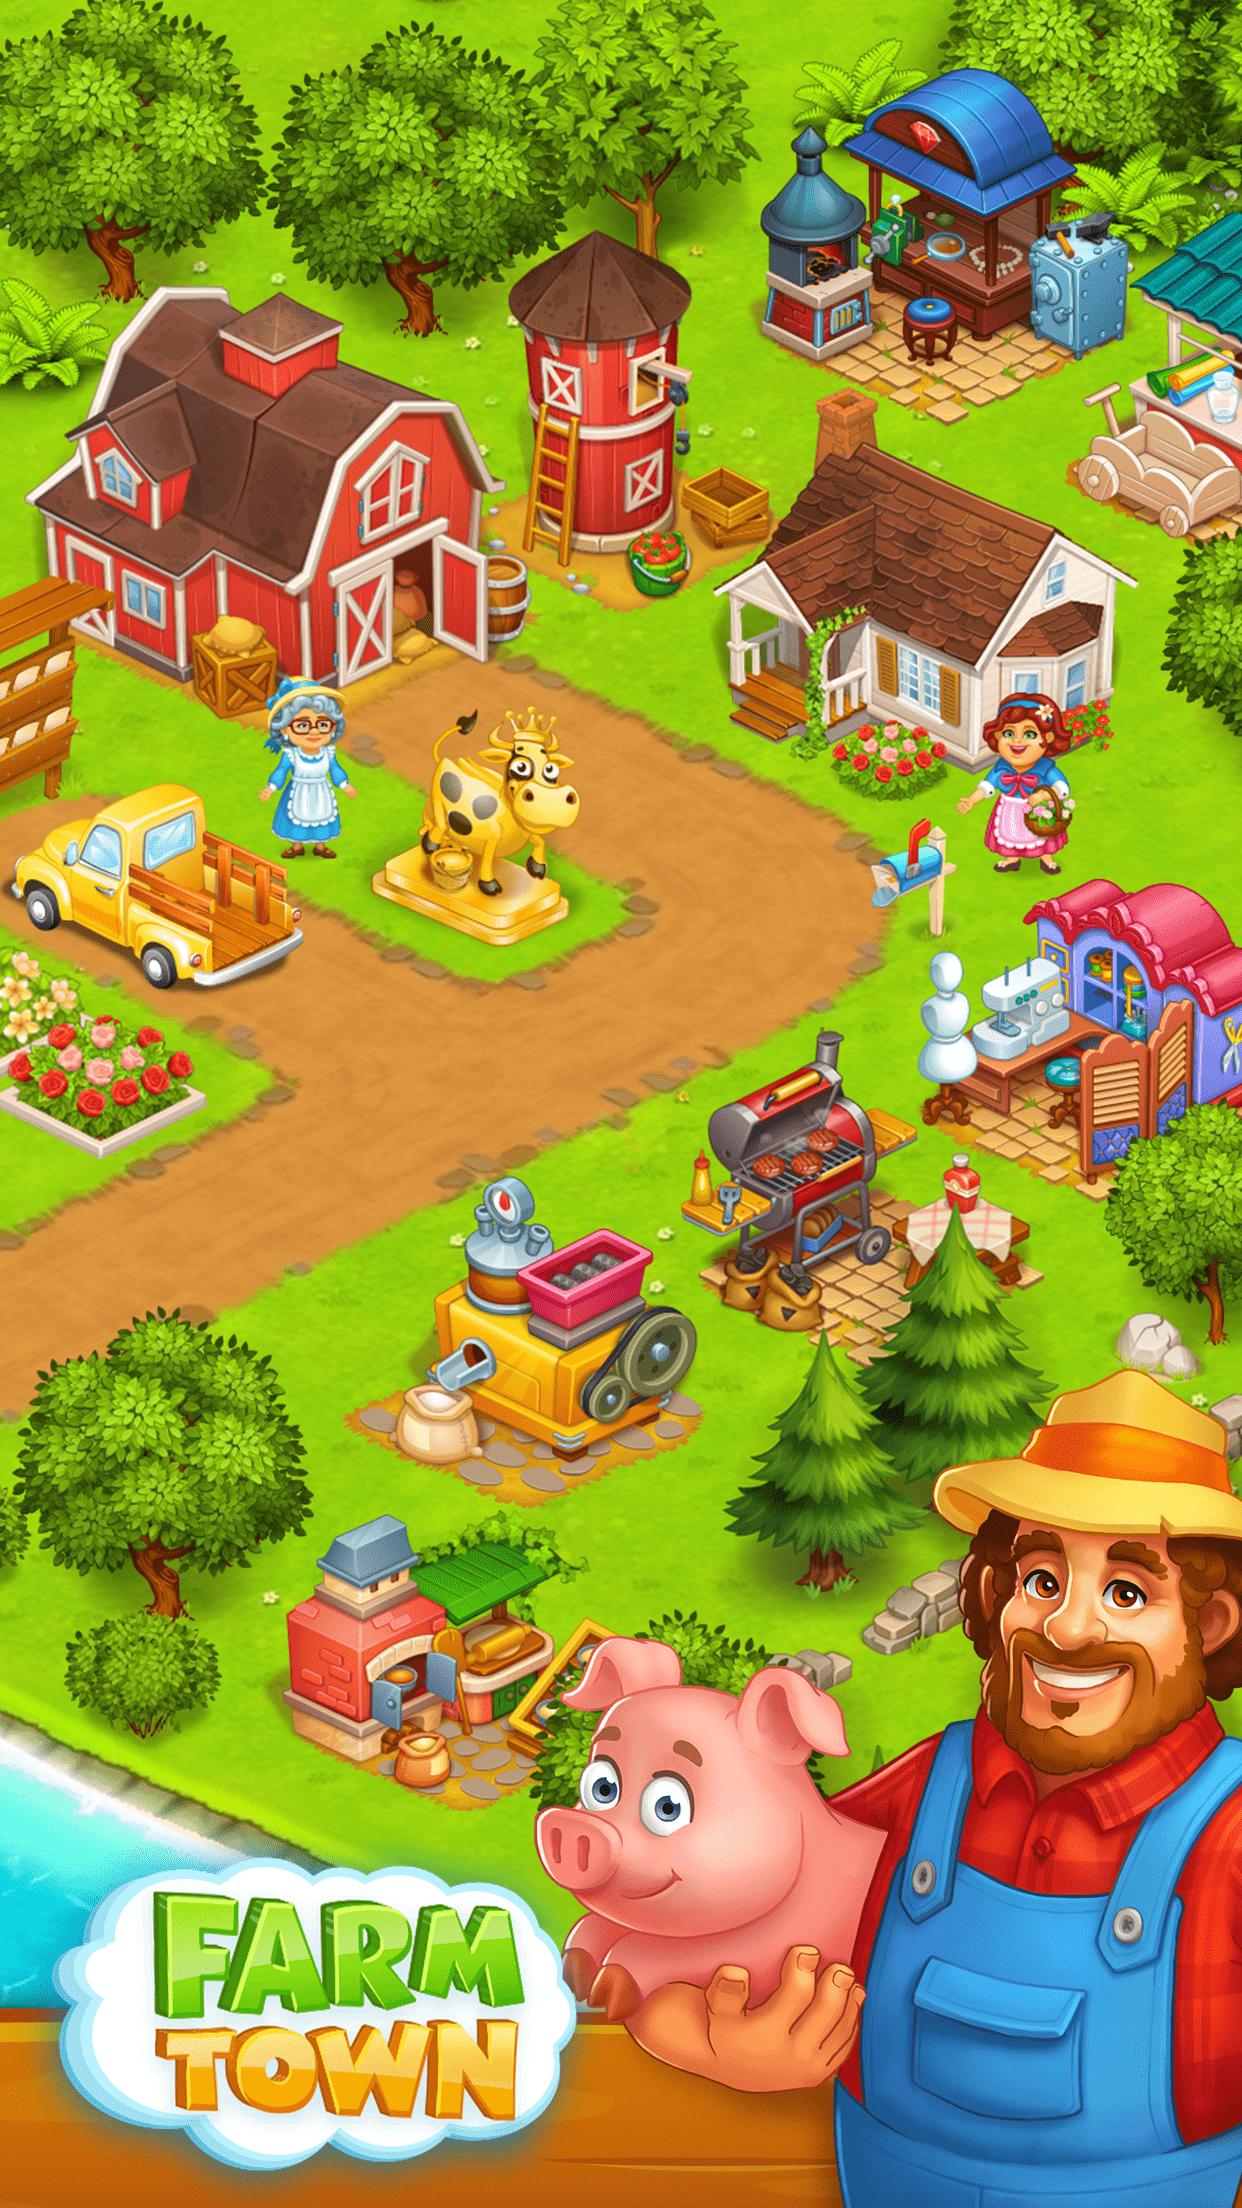 Farm Town: Happy village near small city and town 3.41 Screenshot 2